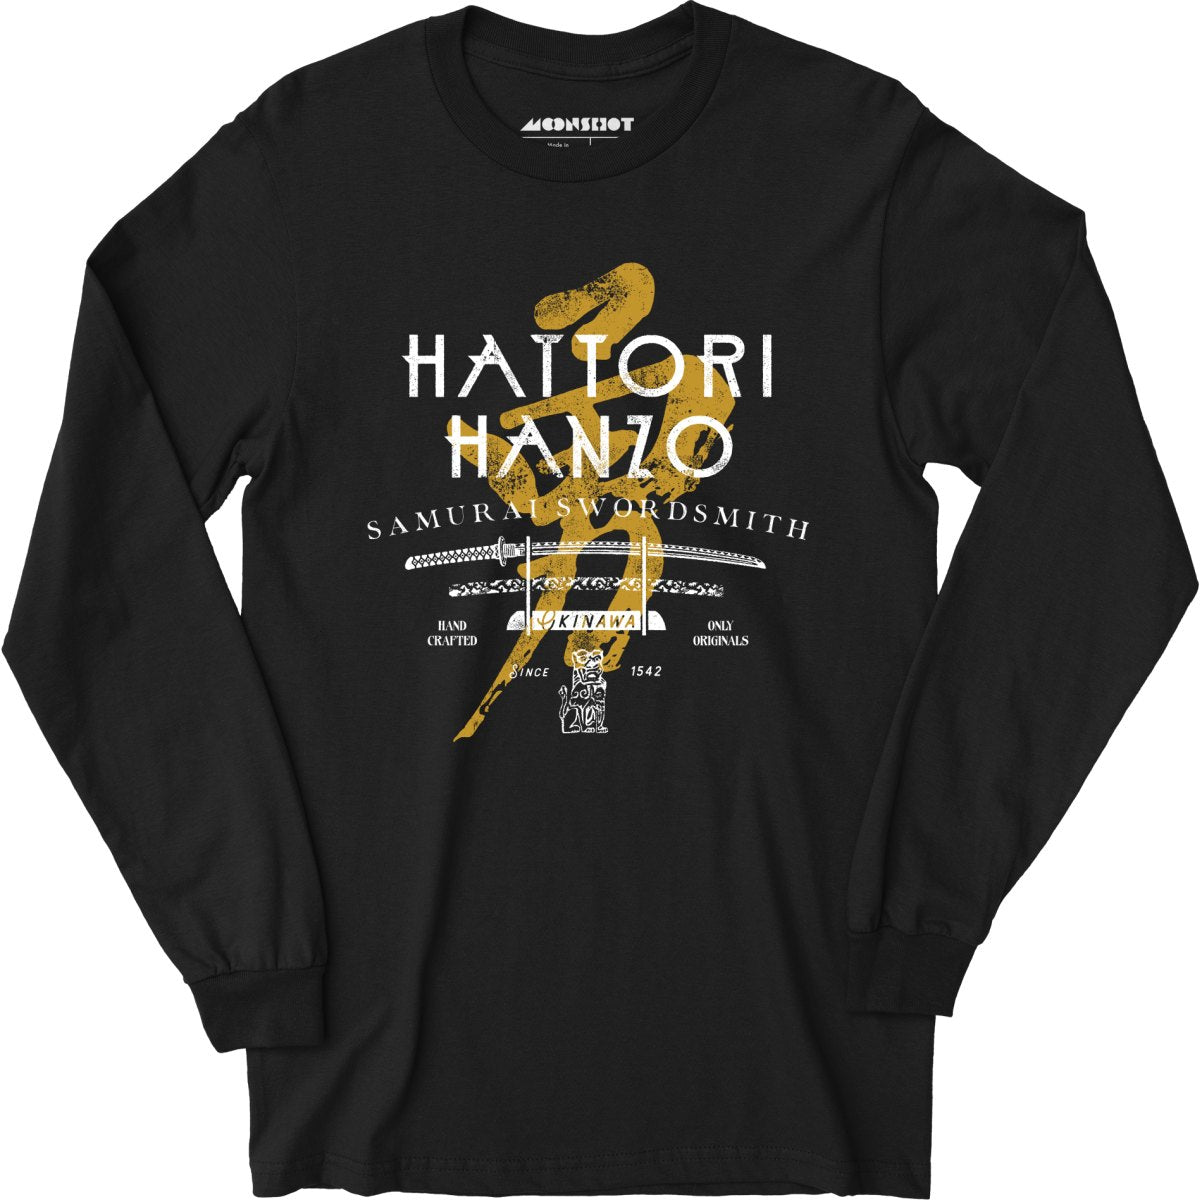 Hattori Hanzo Samurai Swordsmith - Long Sleeve T-Shirt